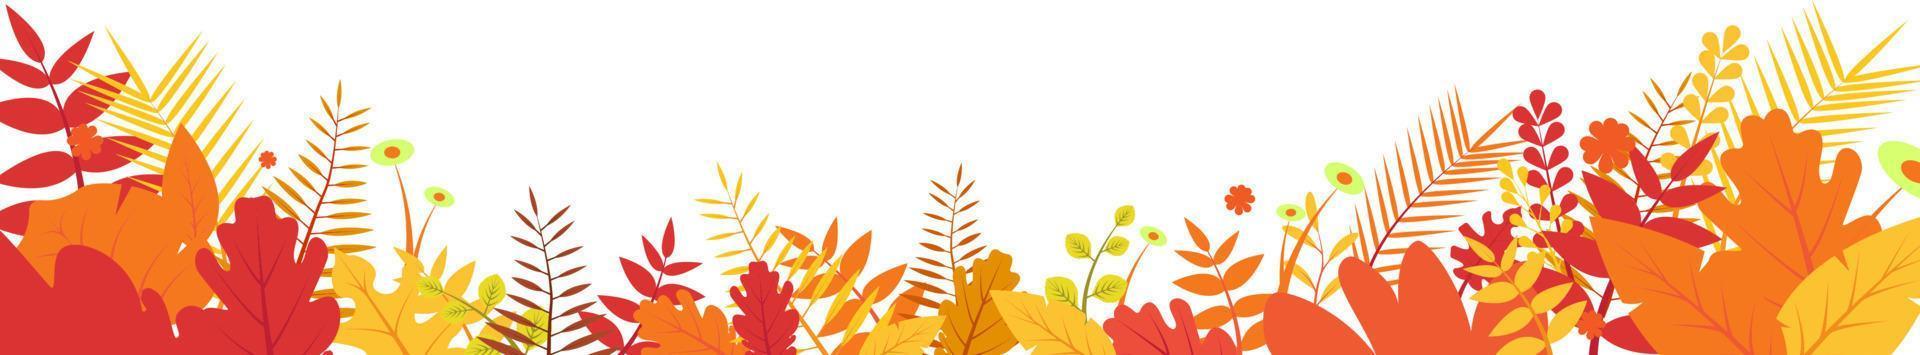 Herbst Hintergrund. Vektor Illustration eps 10